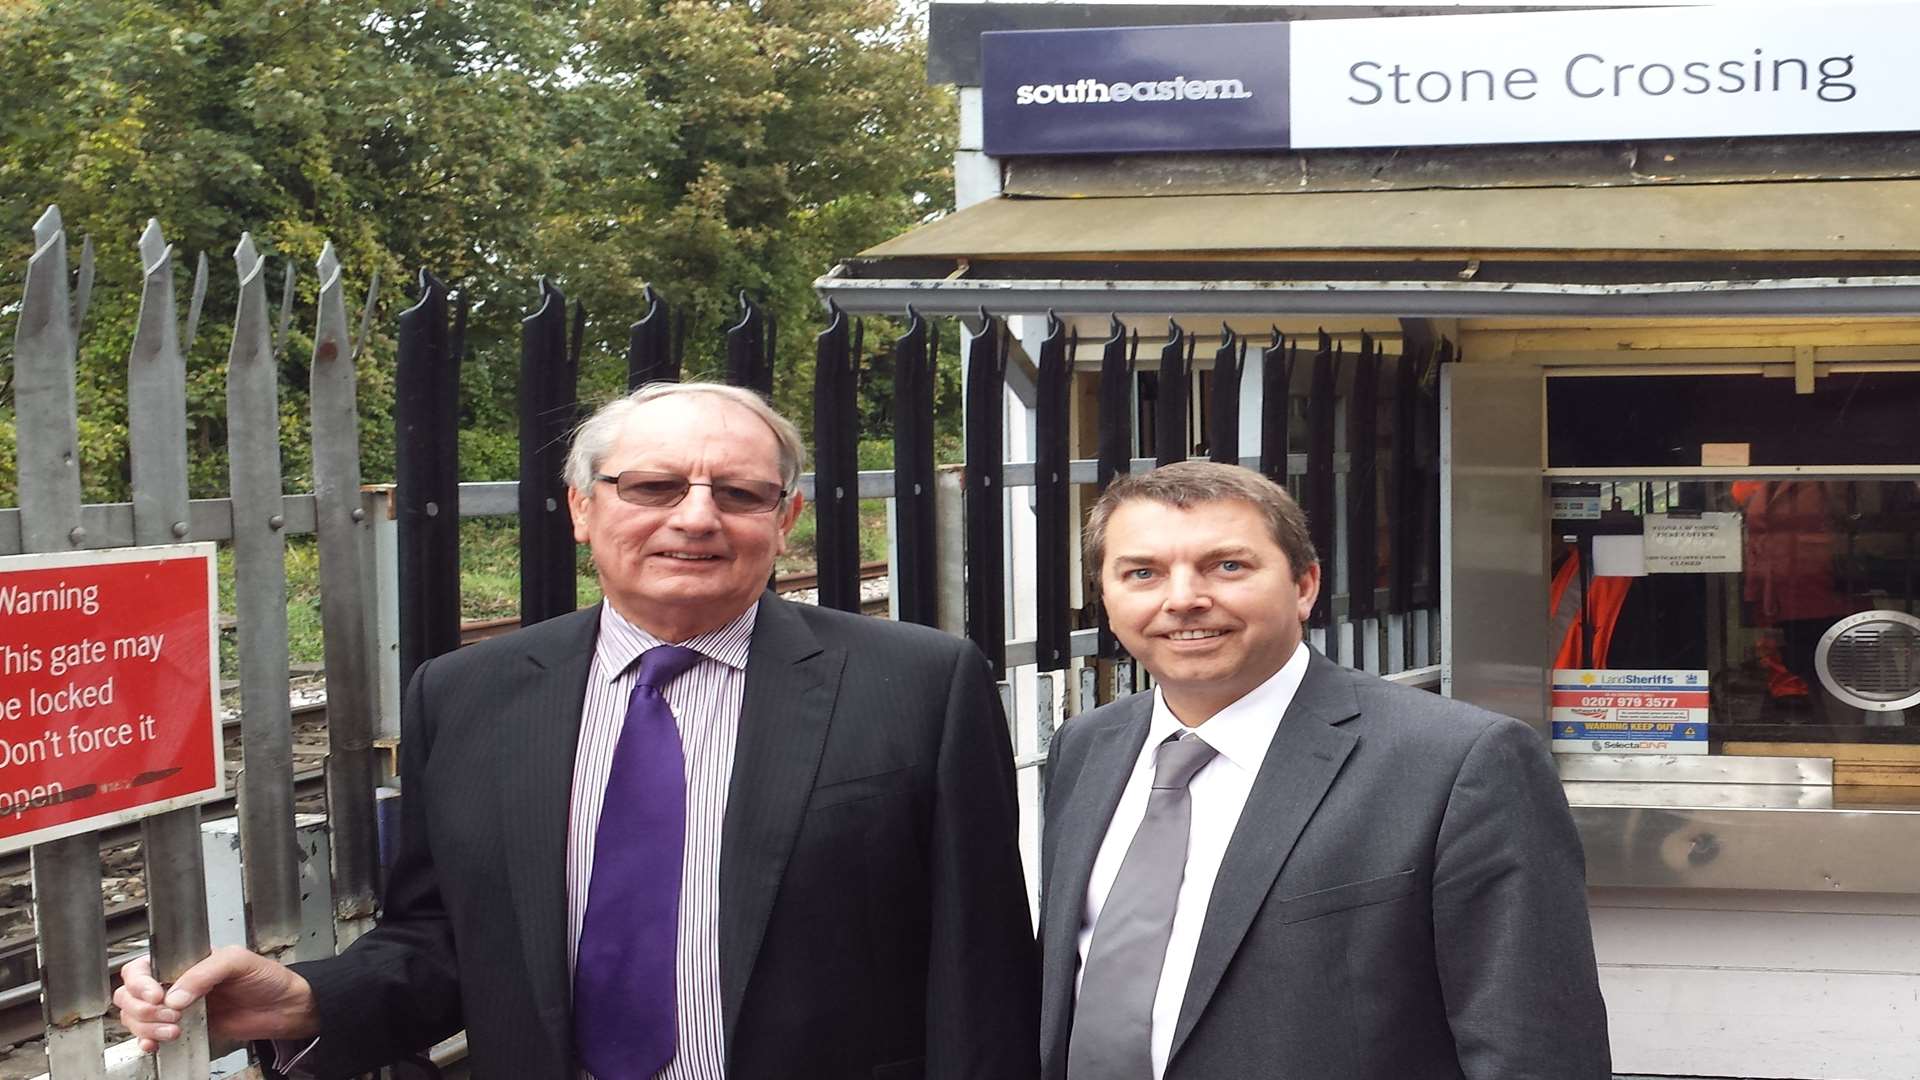 Gareth Johnson MP and Cllr John Burrell at Stone Crossing train station crossing